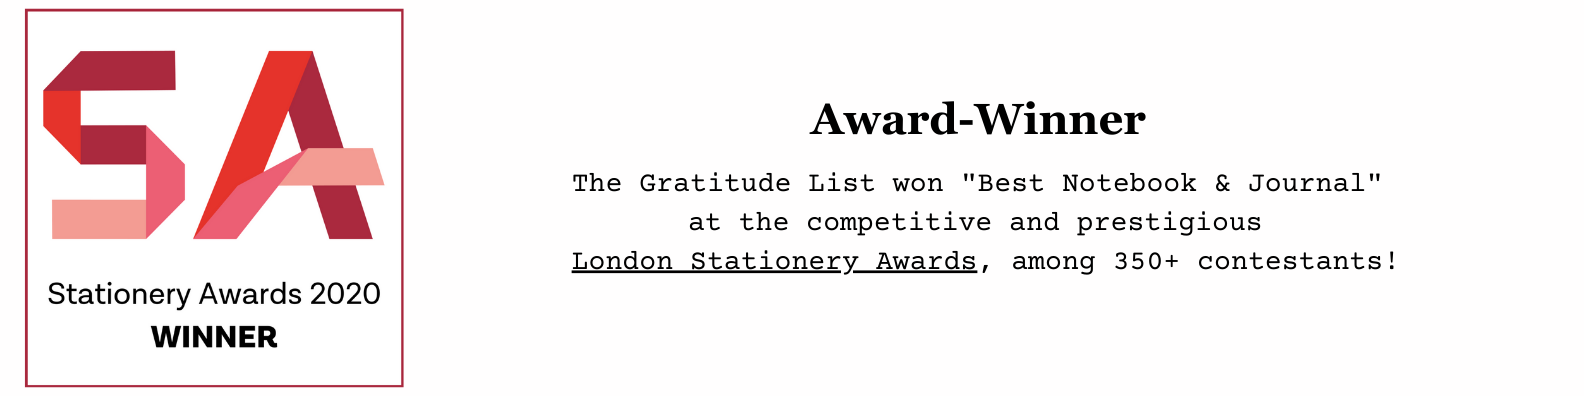 The Award-Winning Gratitude List Journal by Lily Samii